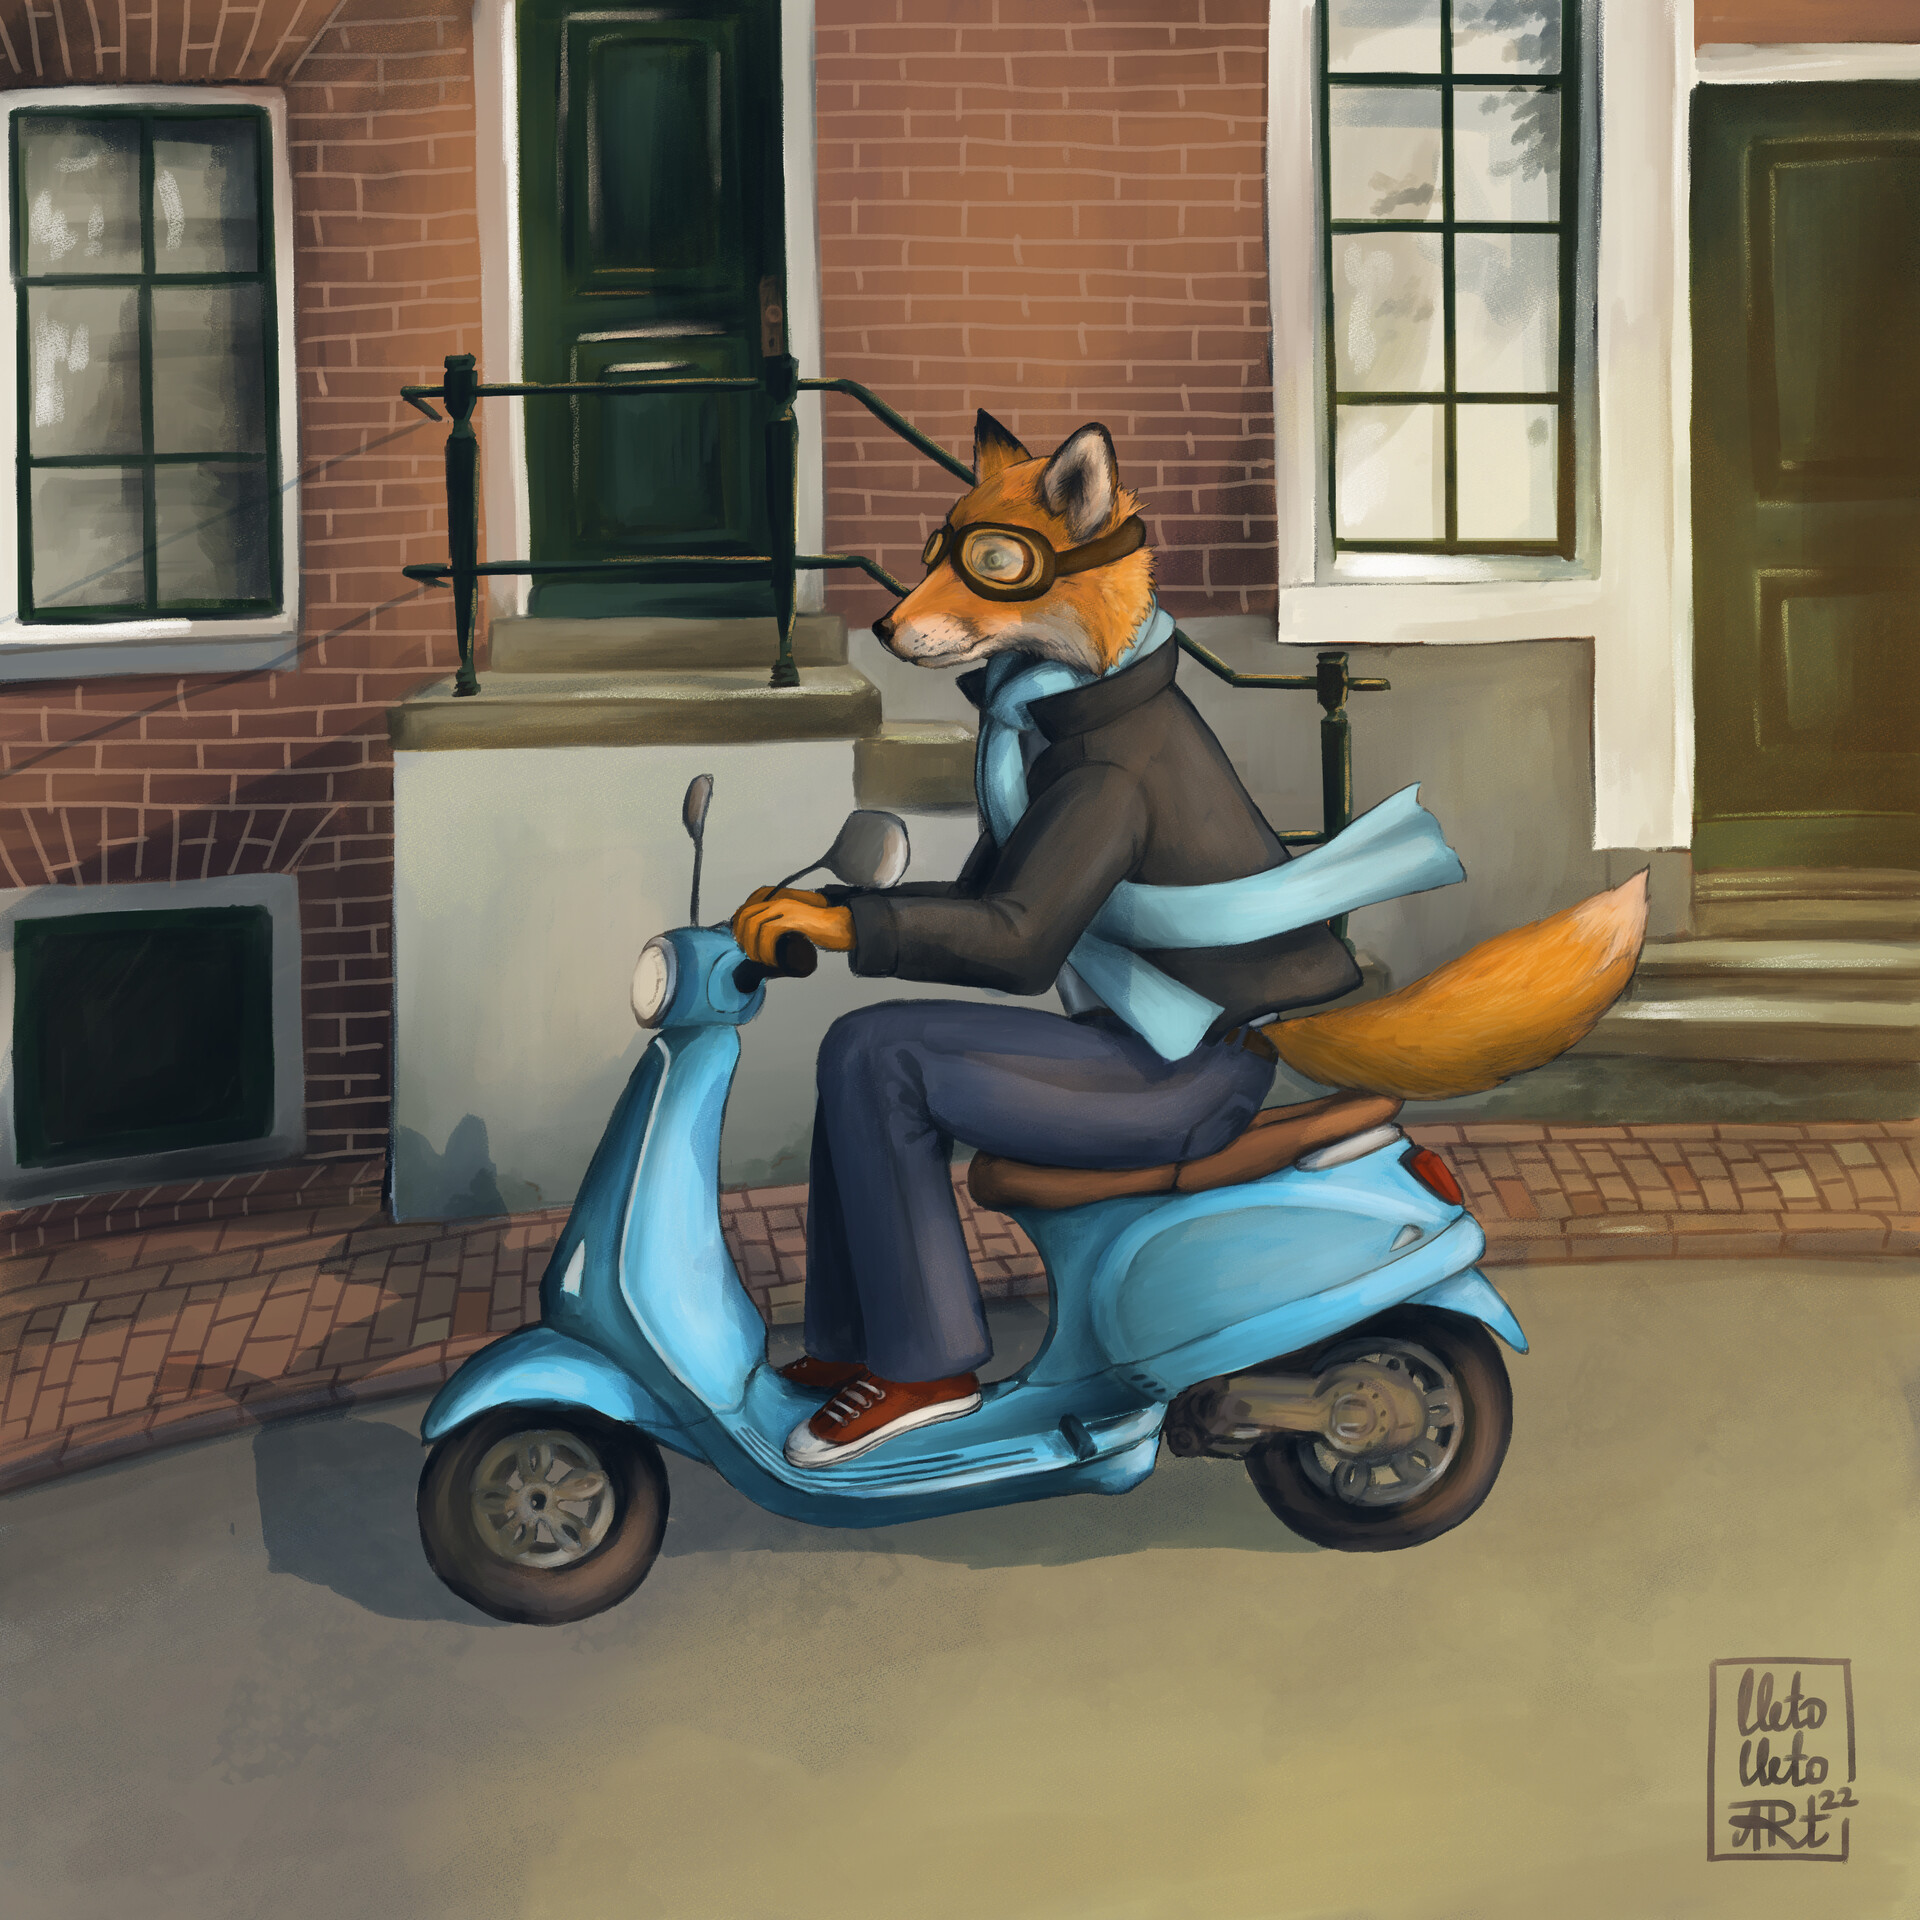 ArtStation - Fox on a scooter